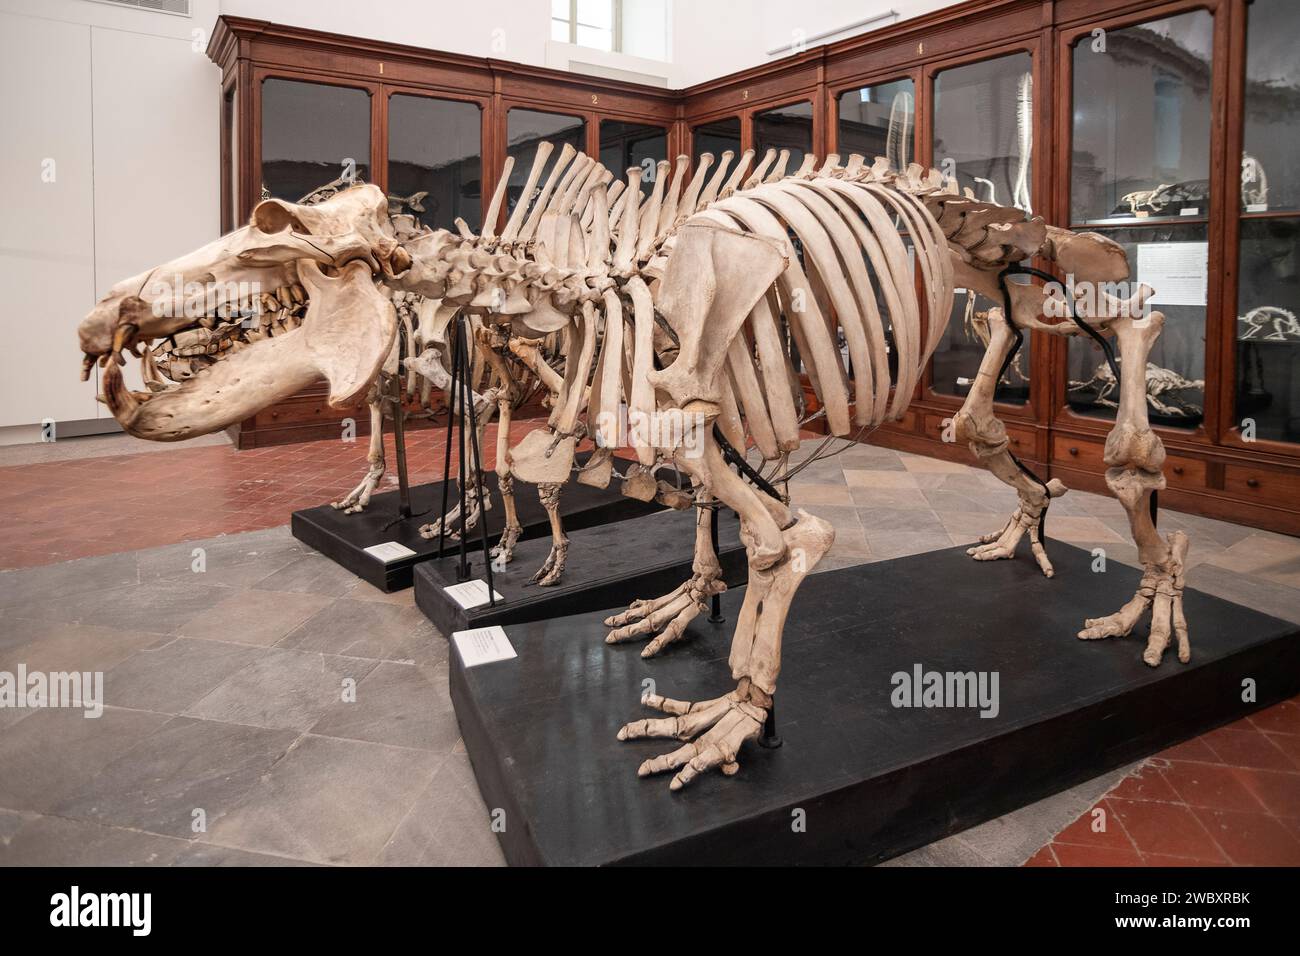 Italien Piemont Turin Regionalmuseum für Naturwissenschaften - Skelett des Hippopotamus amphibius, Hippopotamus Credit: Realy Easy Star/Alamy Live News Stockfoto